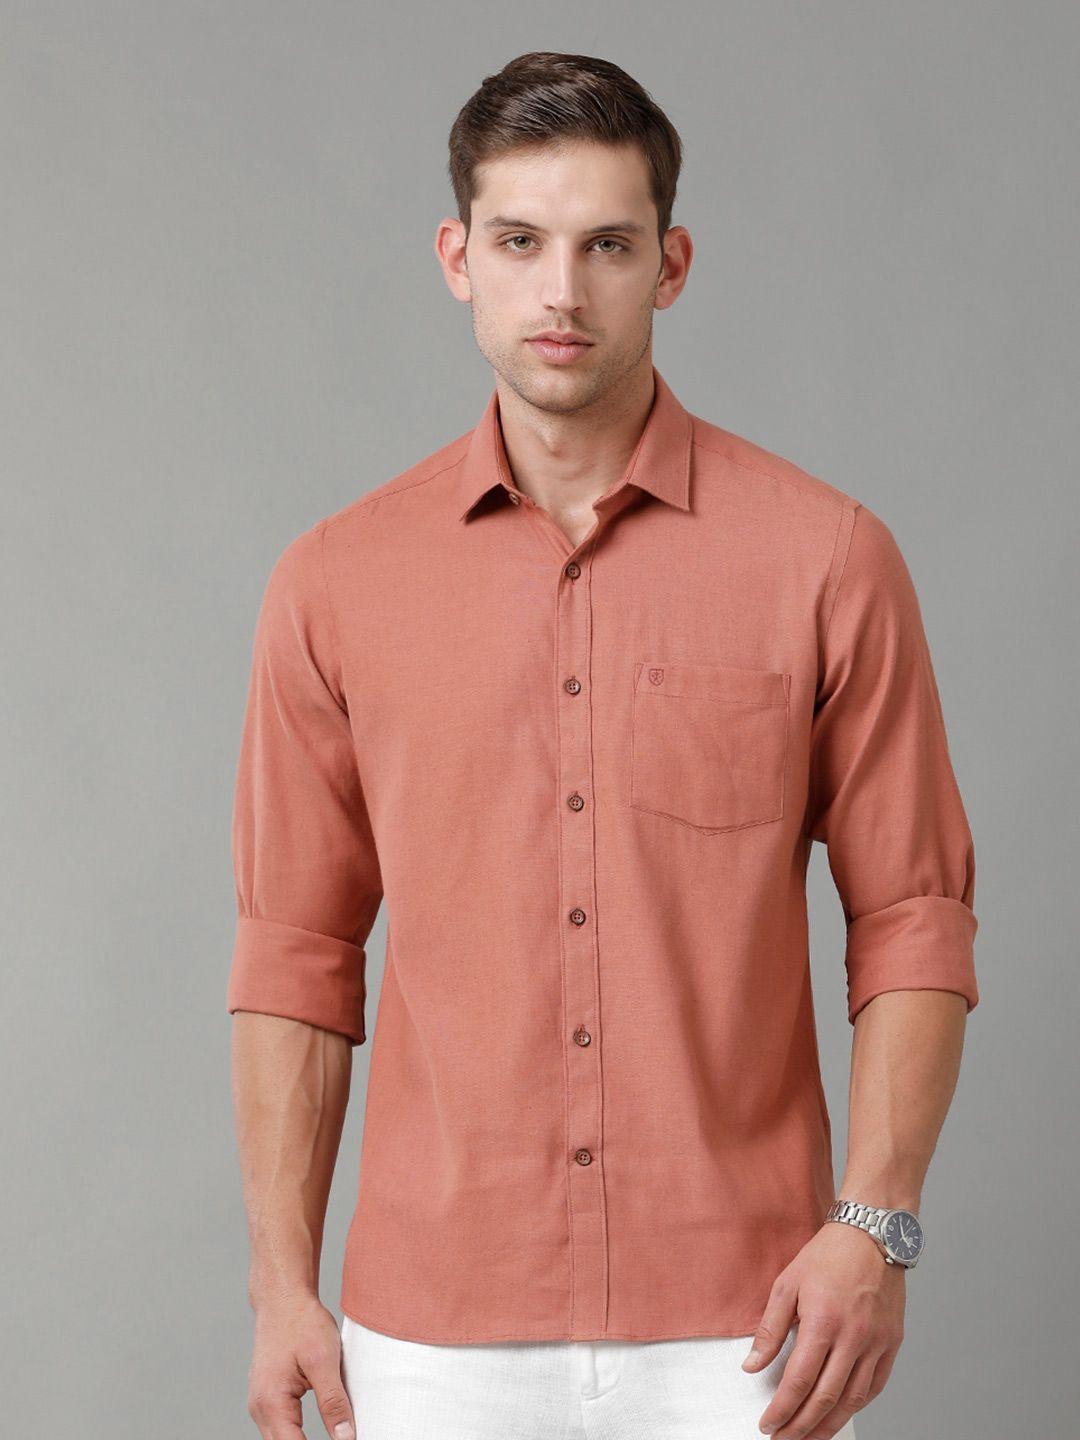 linen-club-contemporary-pure-linen-casual-shirt